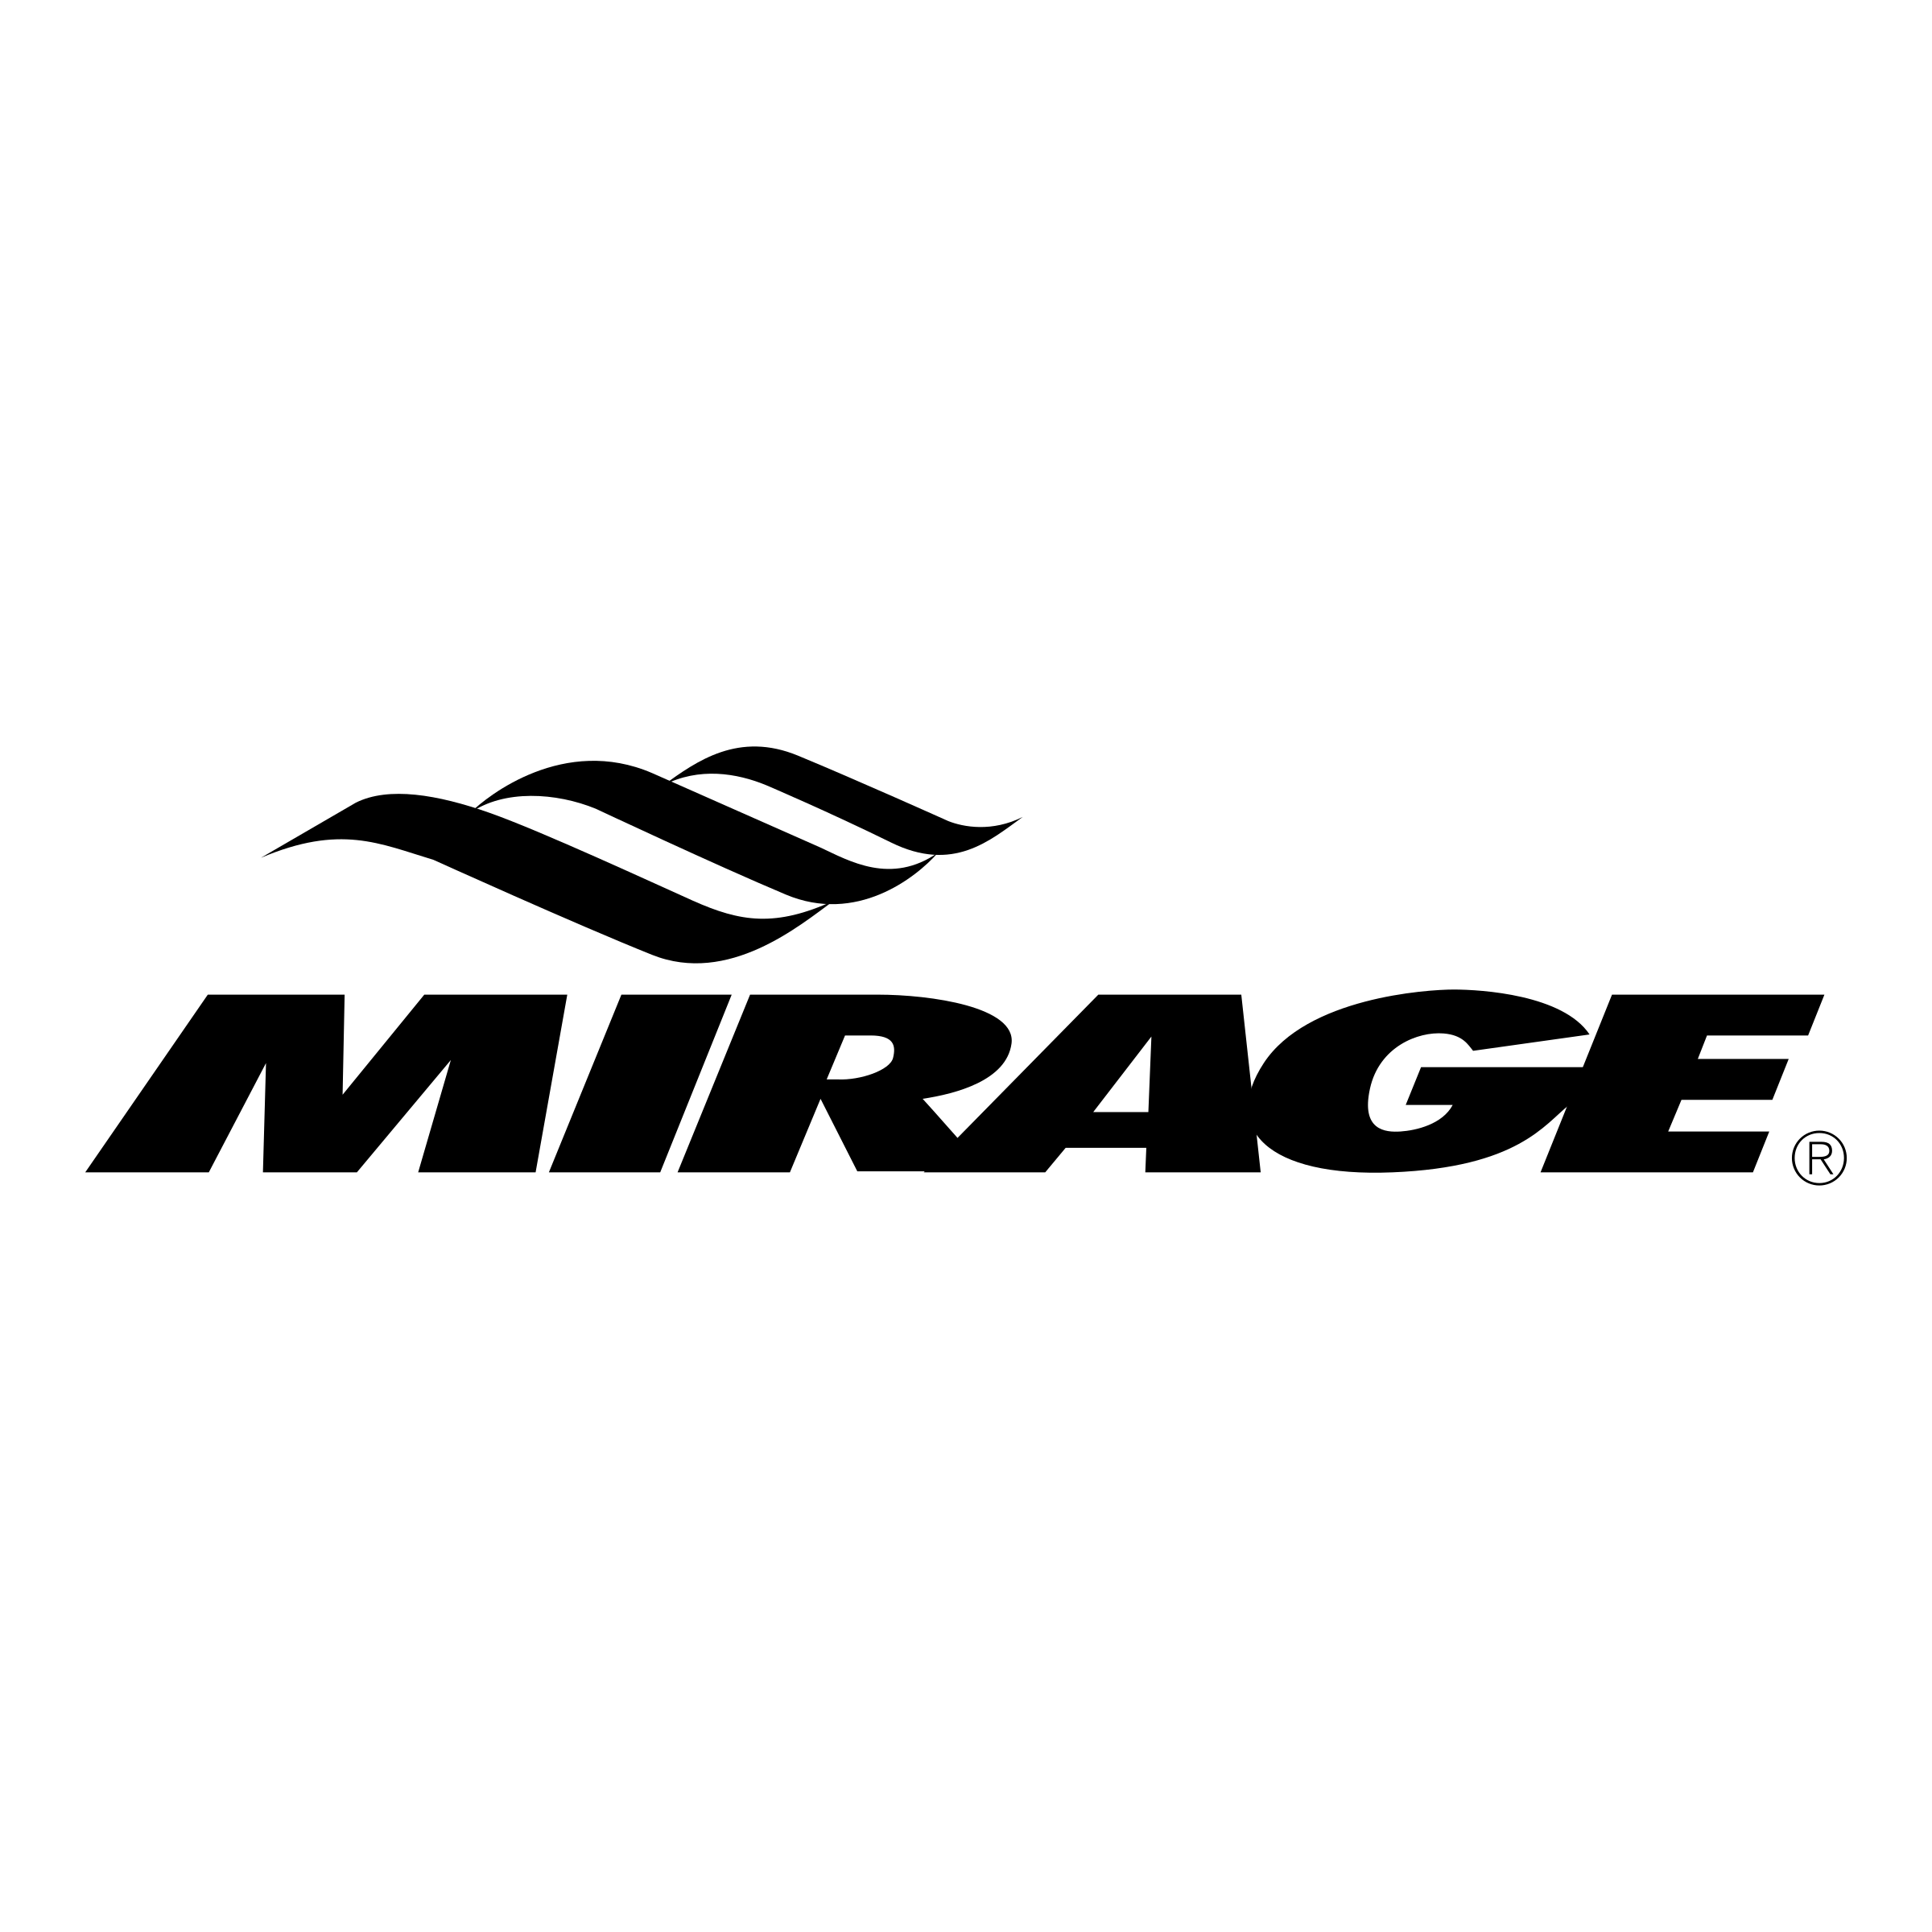 Mirage Logo - Mirage Logo PNG Transparent & SVG Vector - Freebie Supply